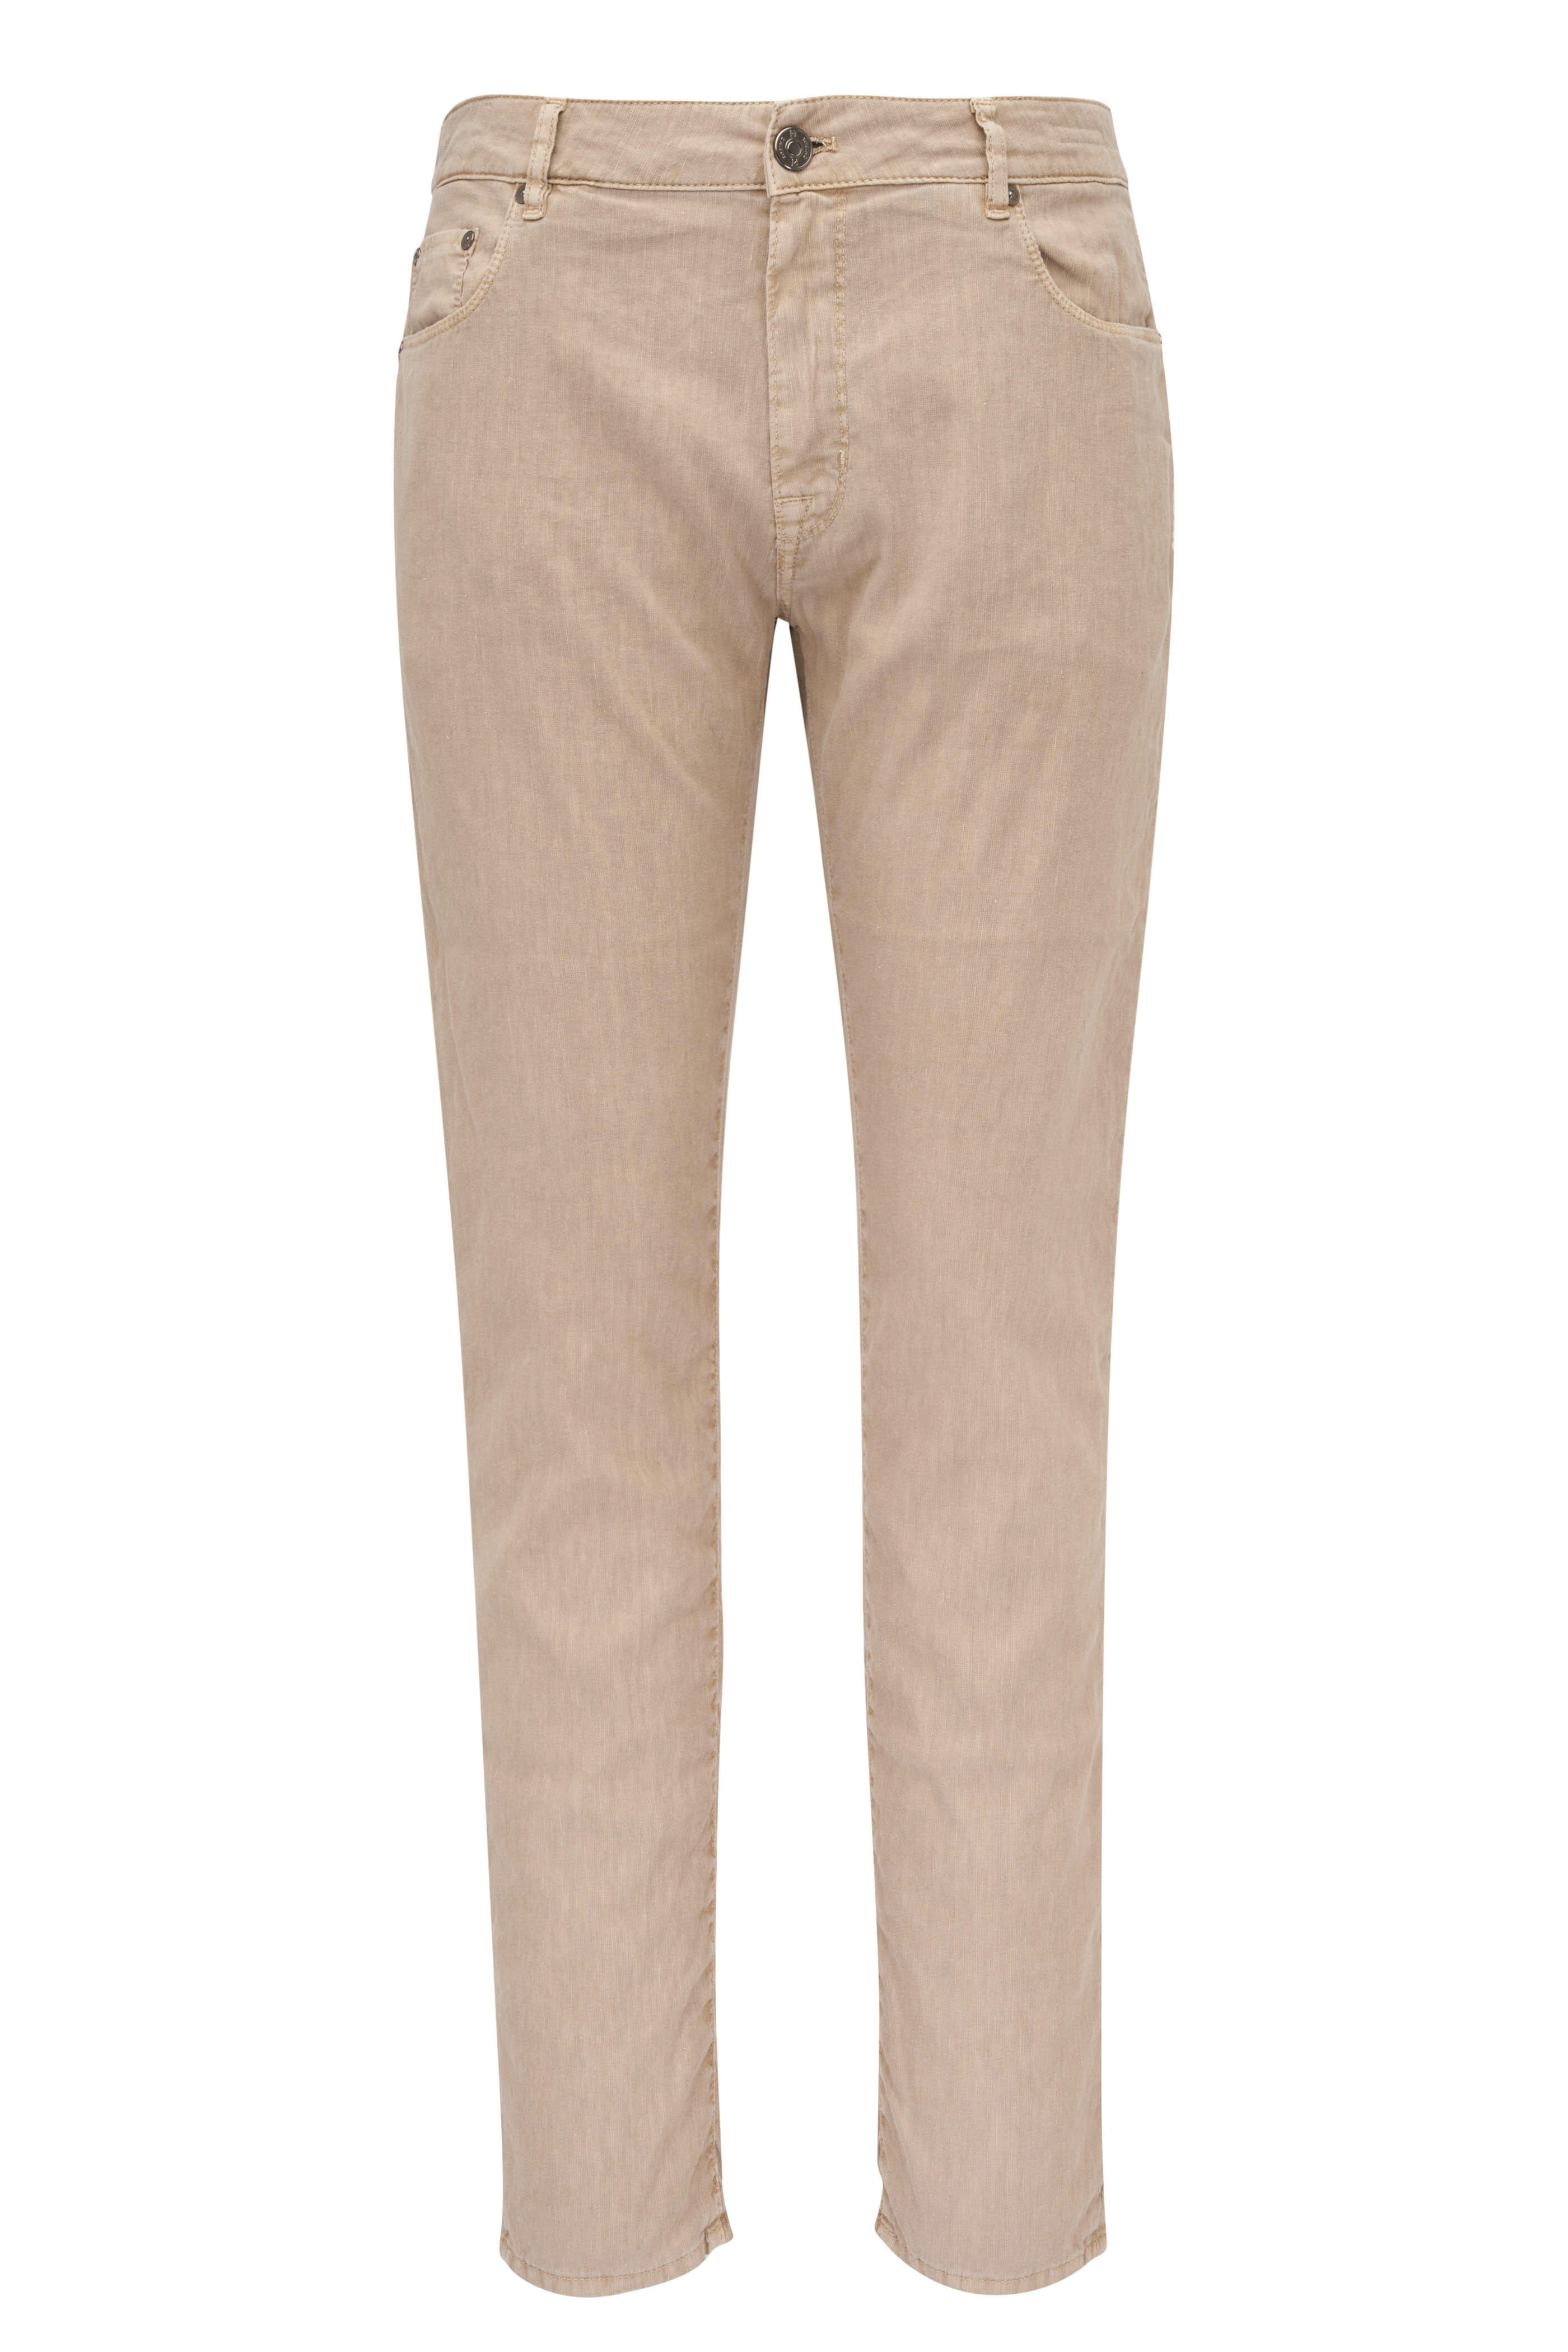 PT Torino - Sand Linen & Cotton Five Pocket Pant